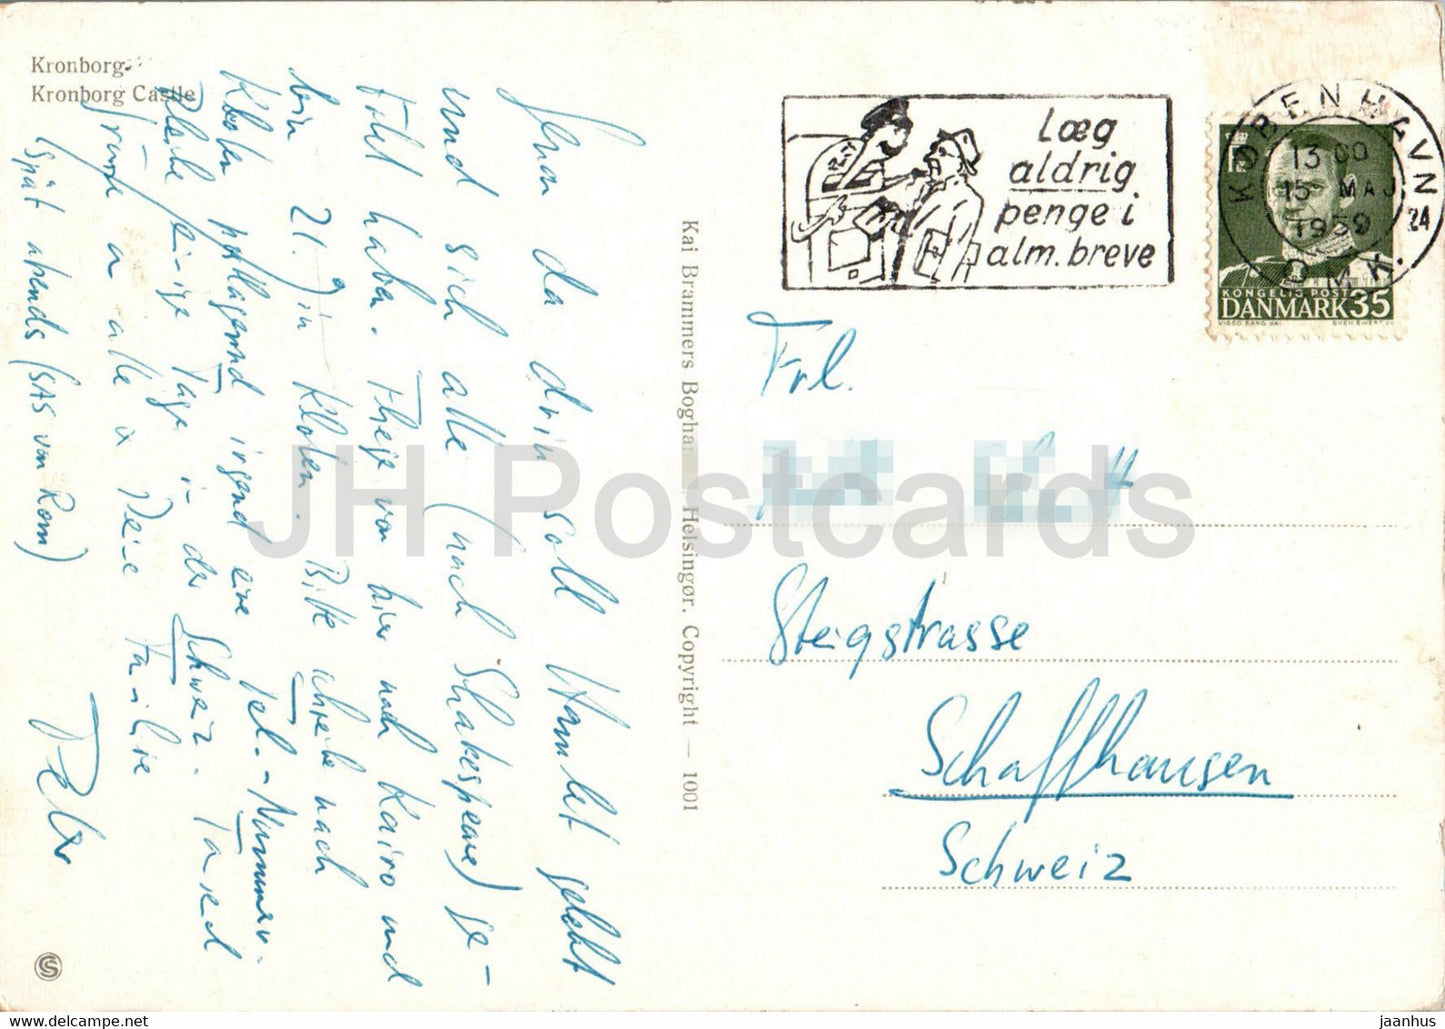 Schloss Kronborg - alte Postkarte - 1001 - 1959 - Dänemark - gebraucht